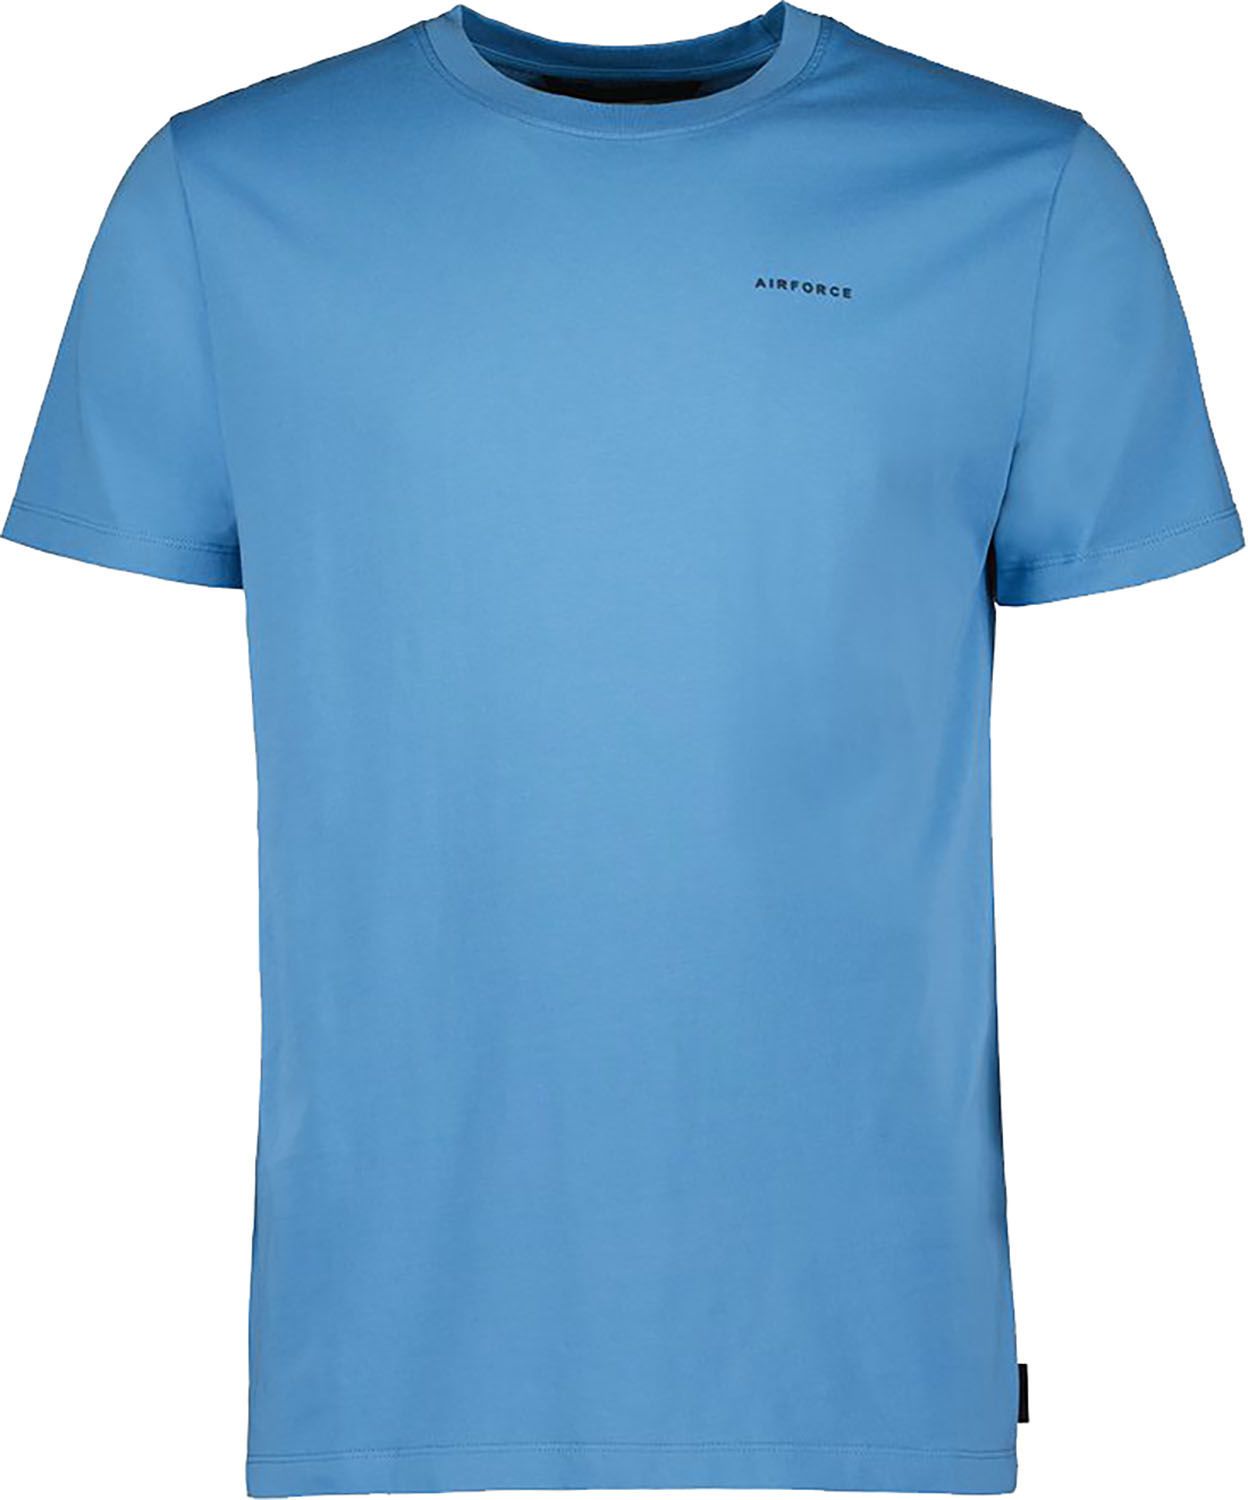 Airforce T-shirt Blauw